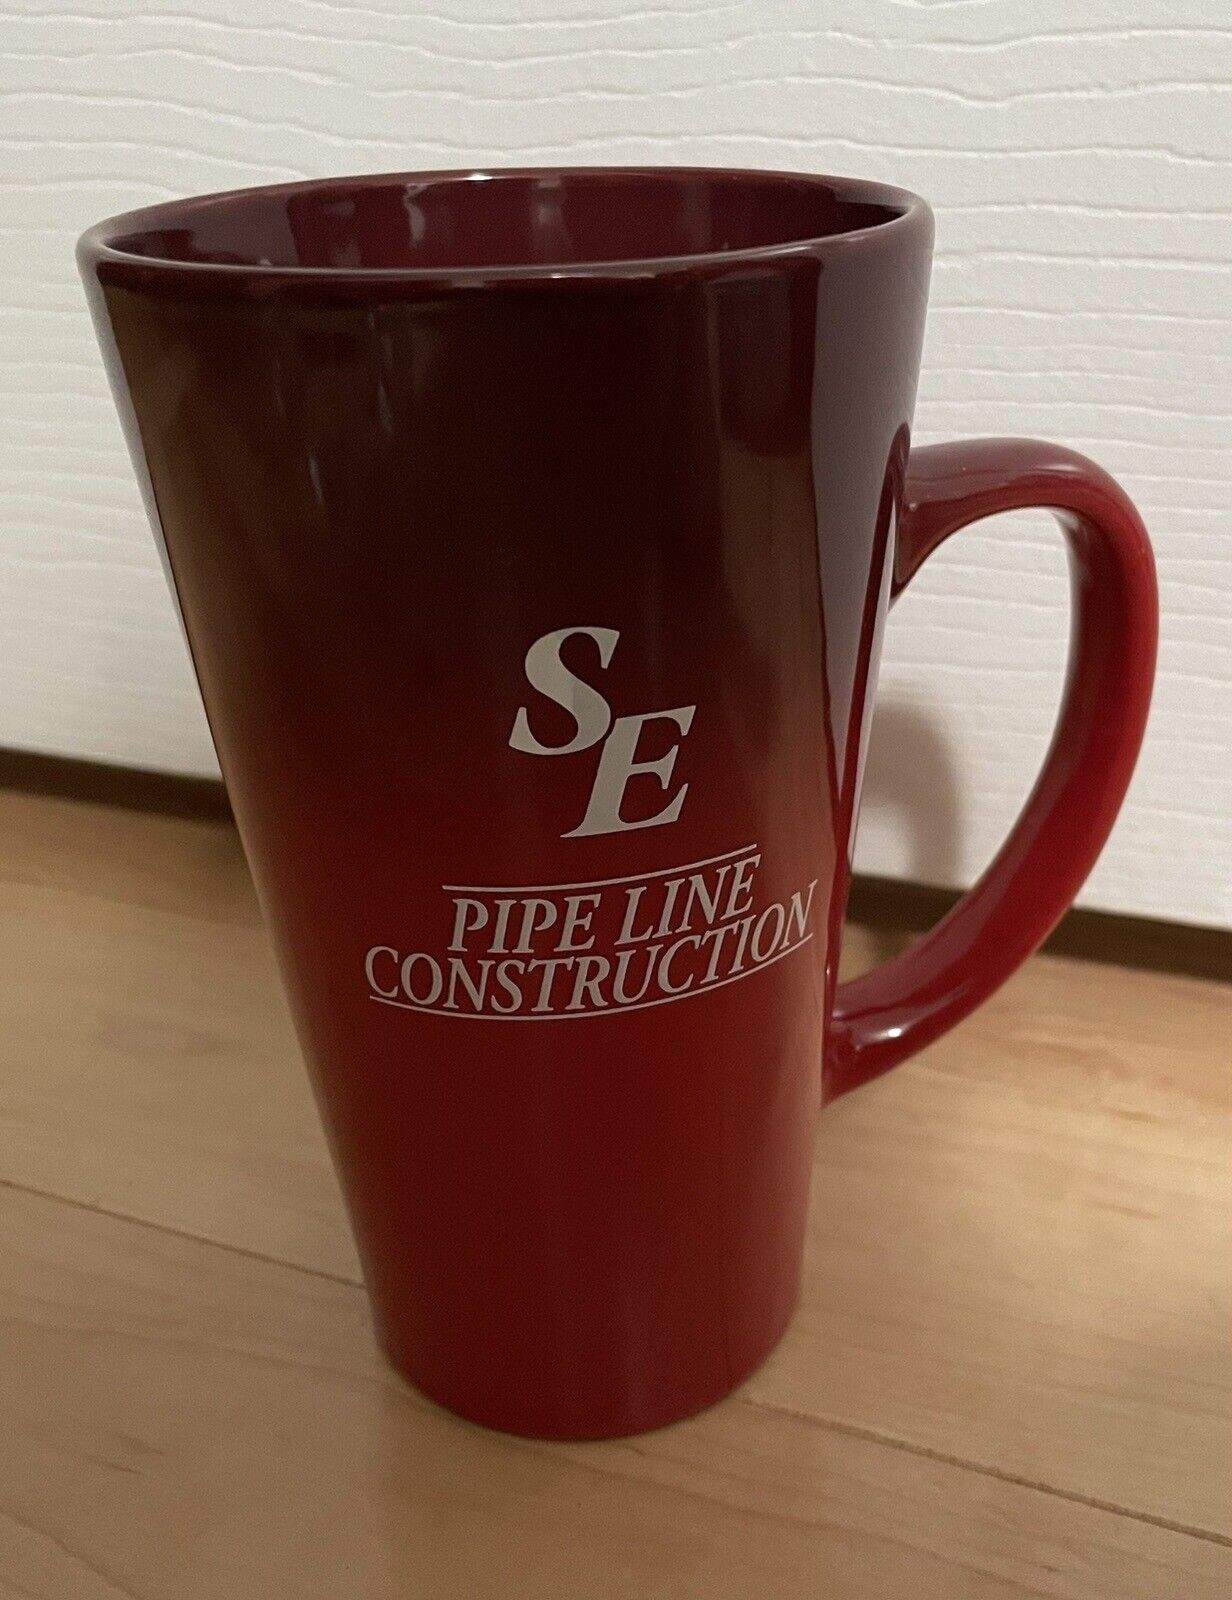 SE Pipeline Construction Coffee Mug 6\